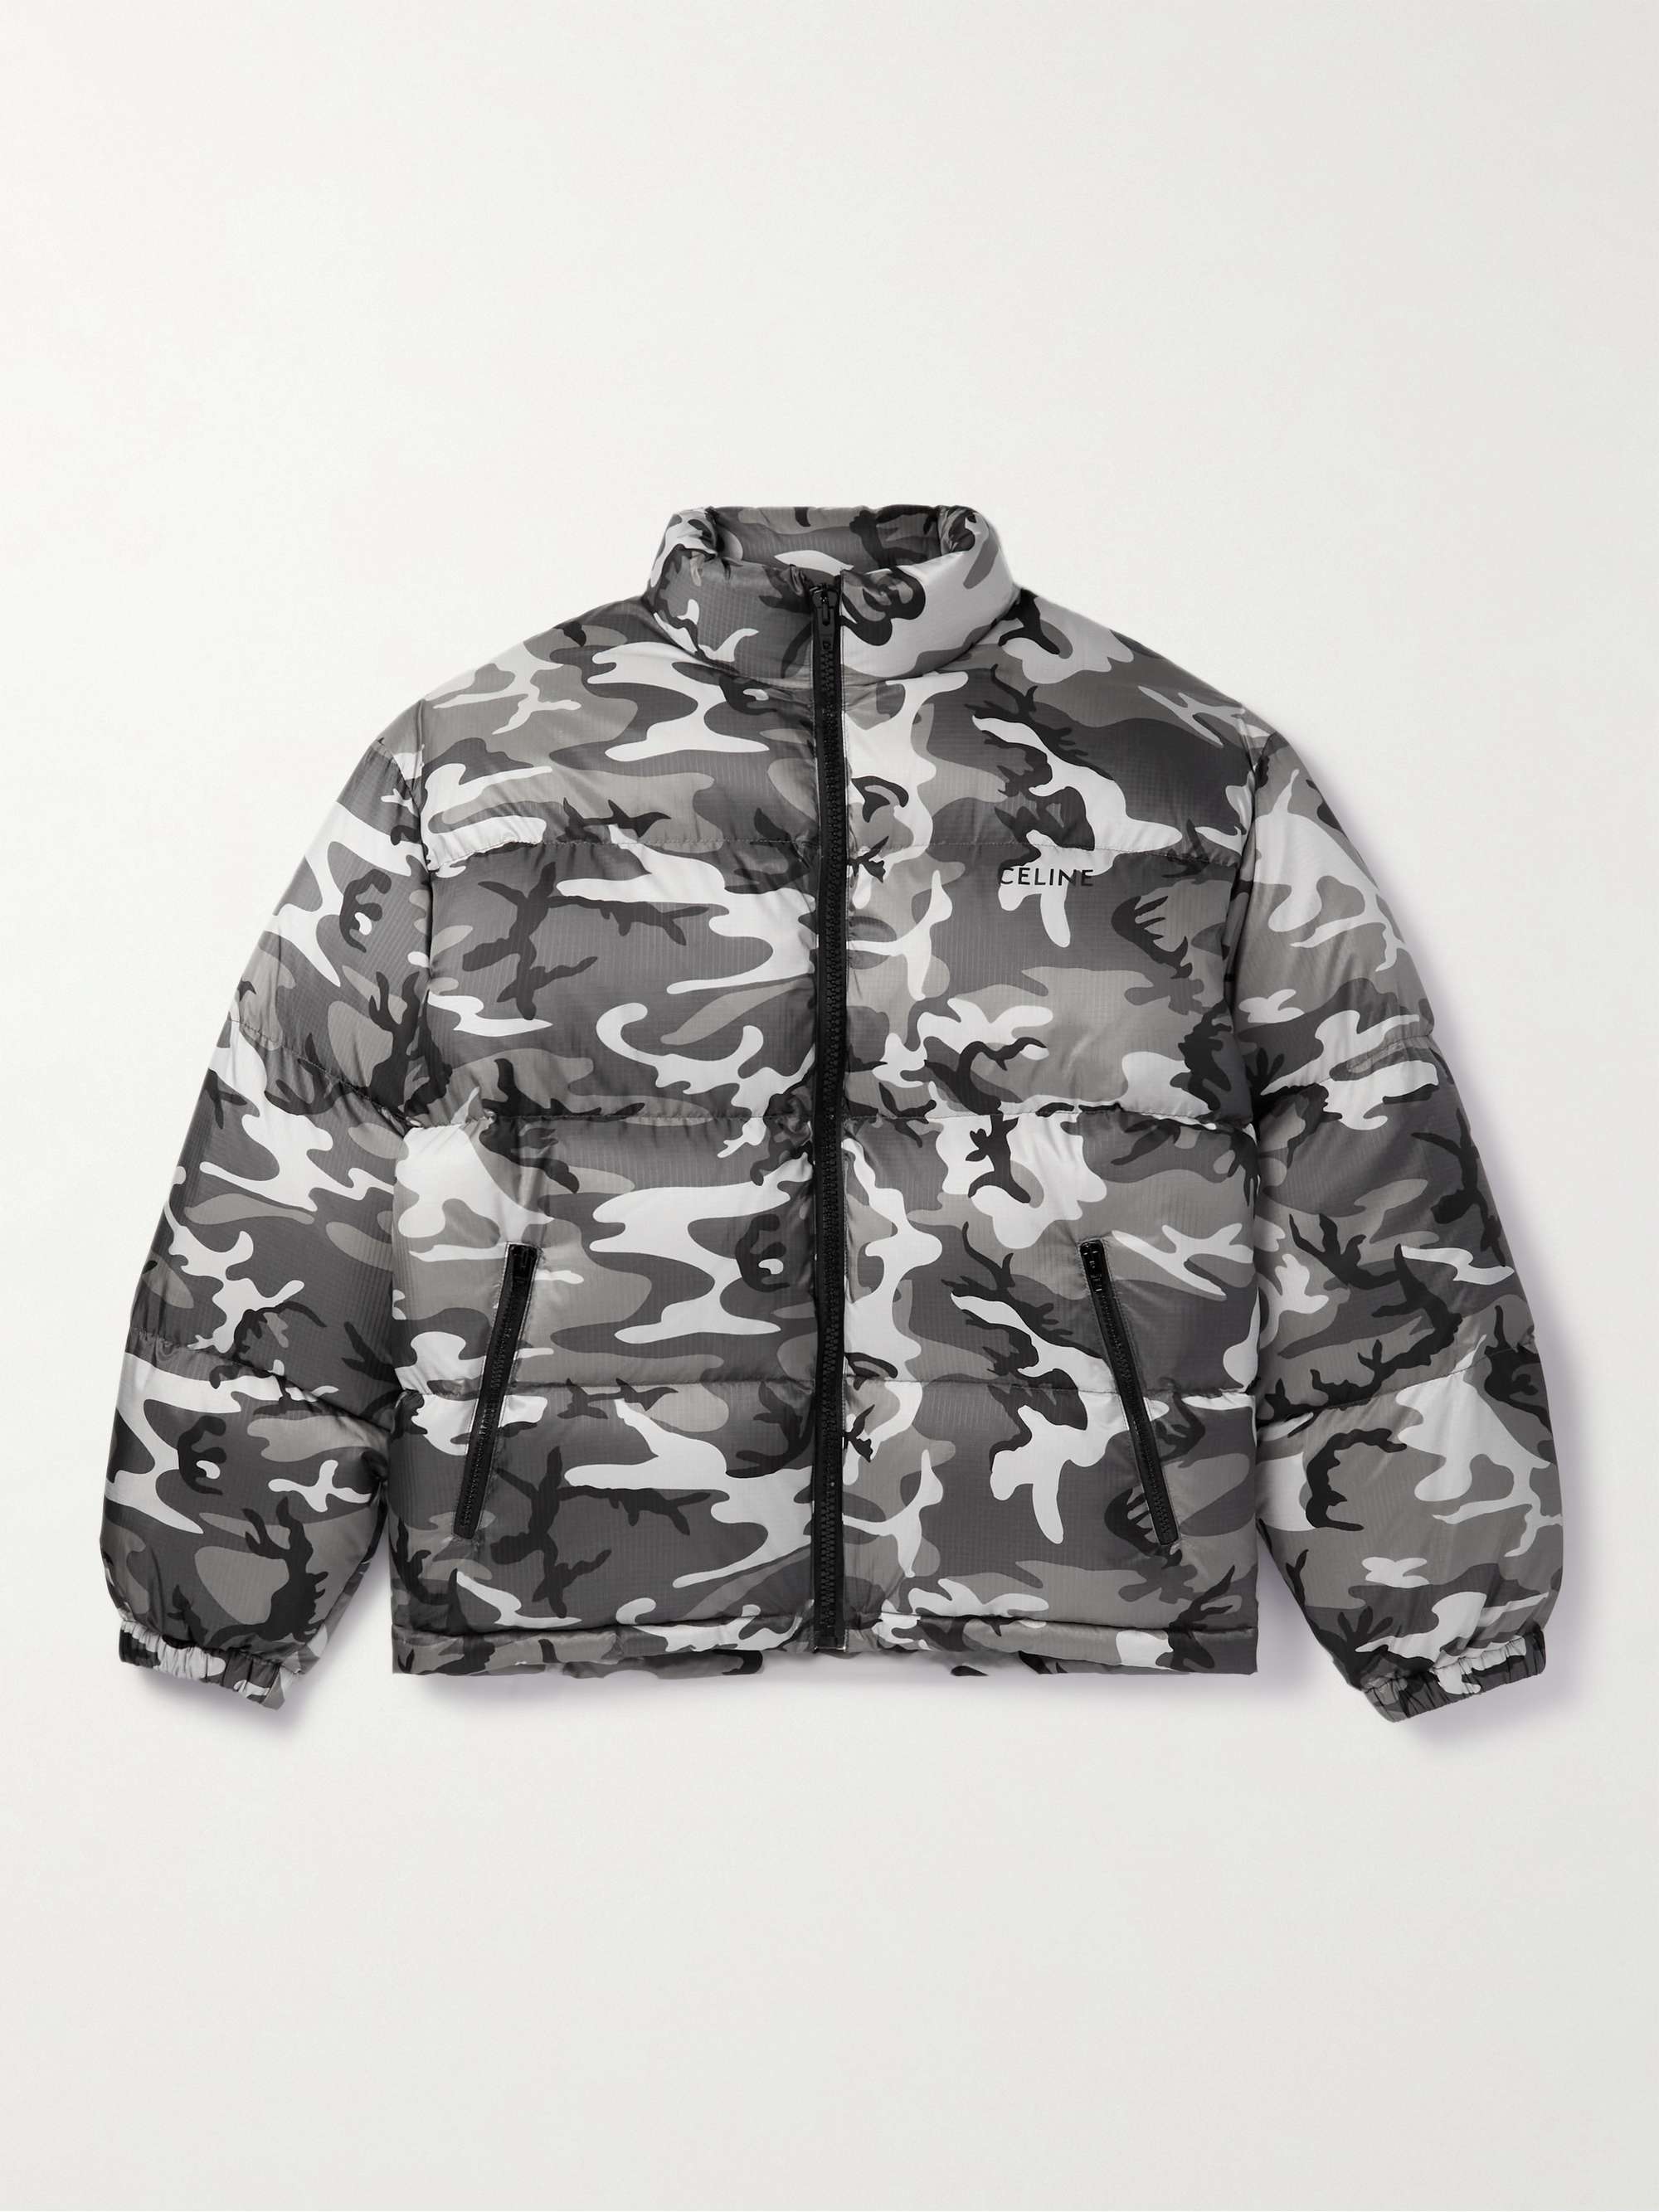 CELINE HOMME Camouflage-Print Nylon-Ripstop Down Jacket